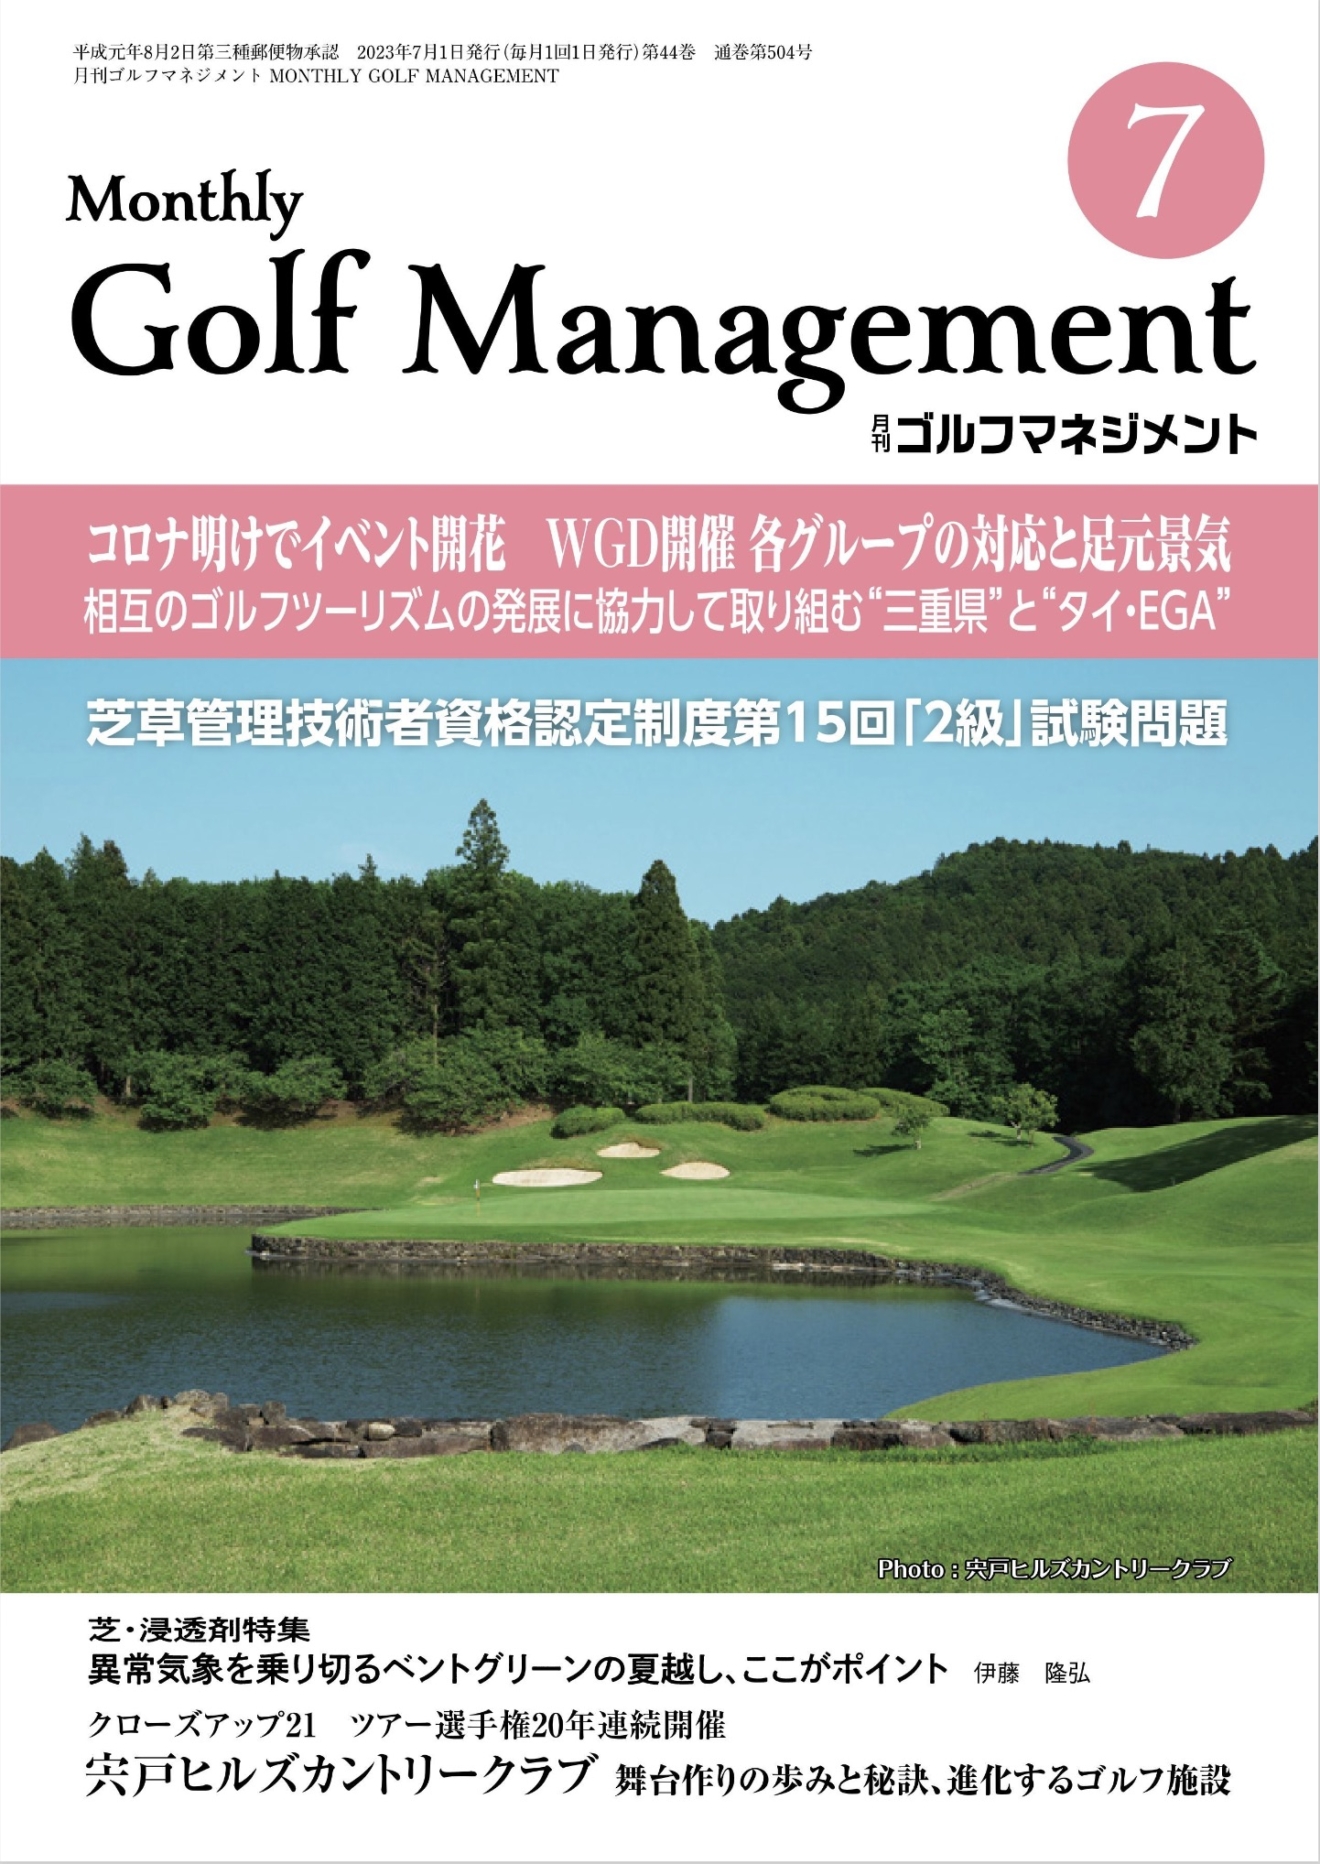 Golfmanagement_1